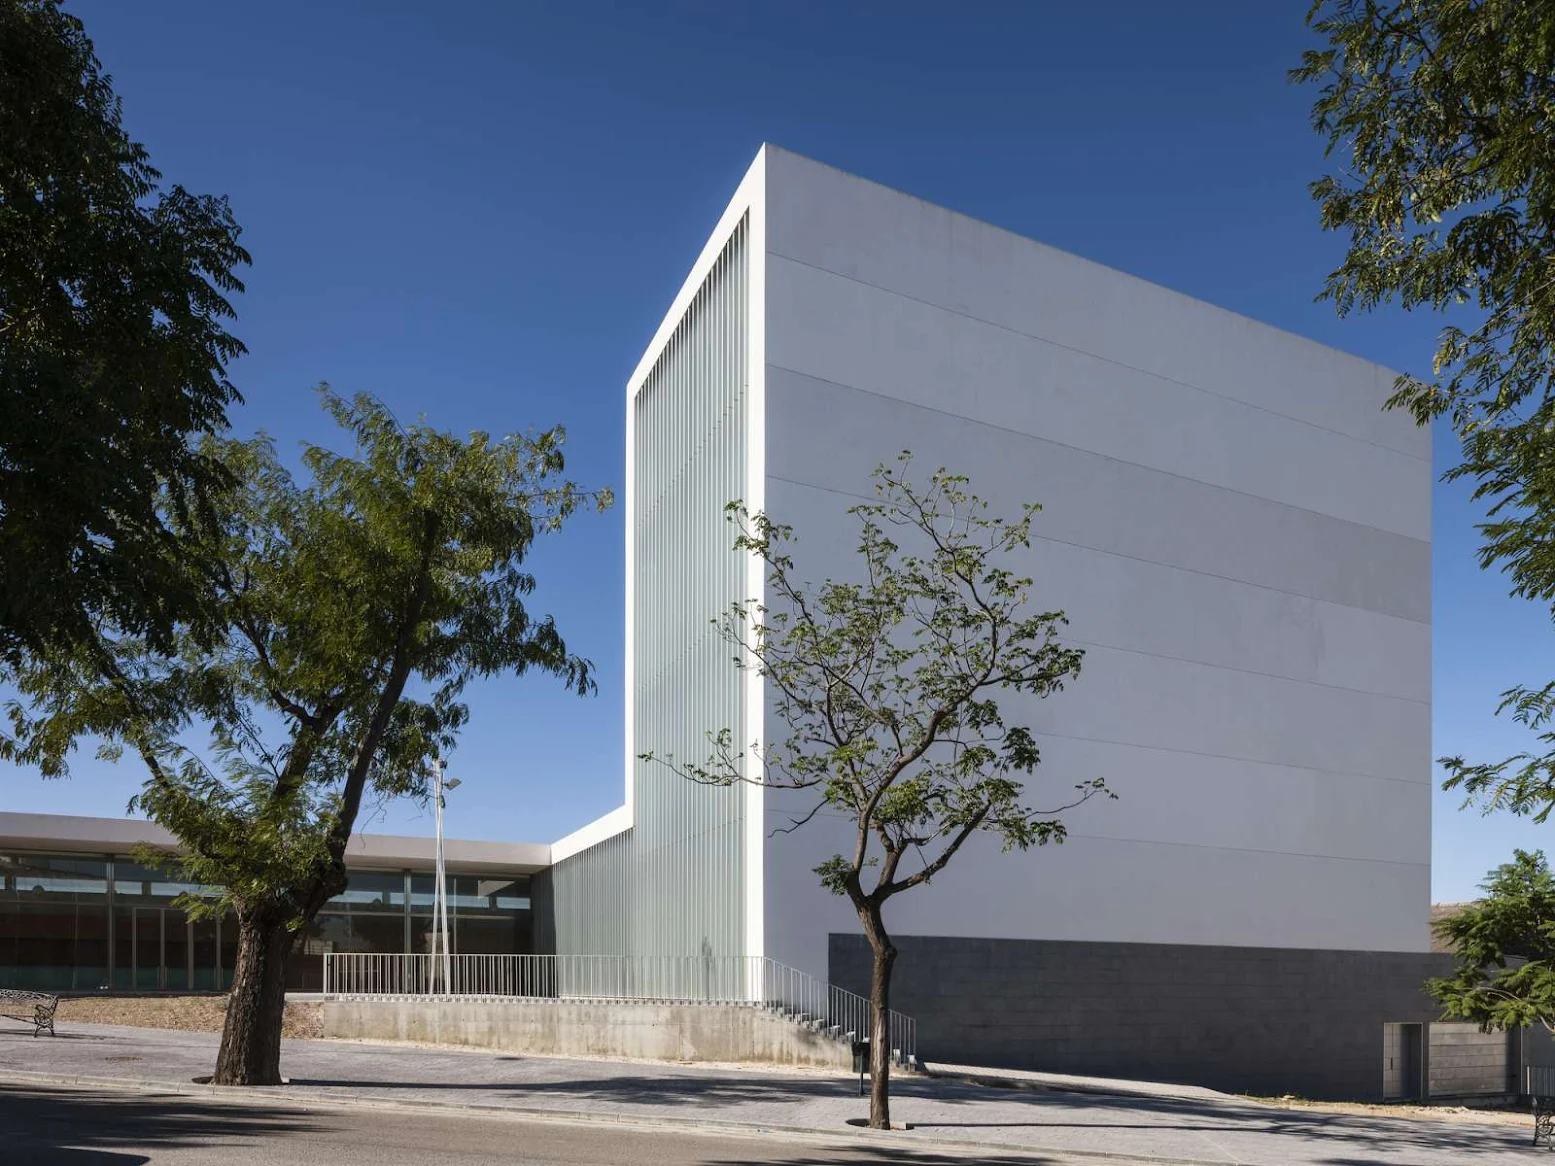 Municipal Theater by Estudio de Arquitectura Javier Terrados